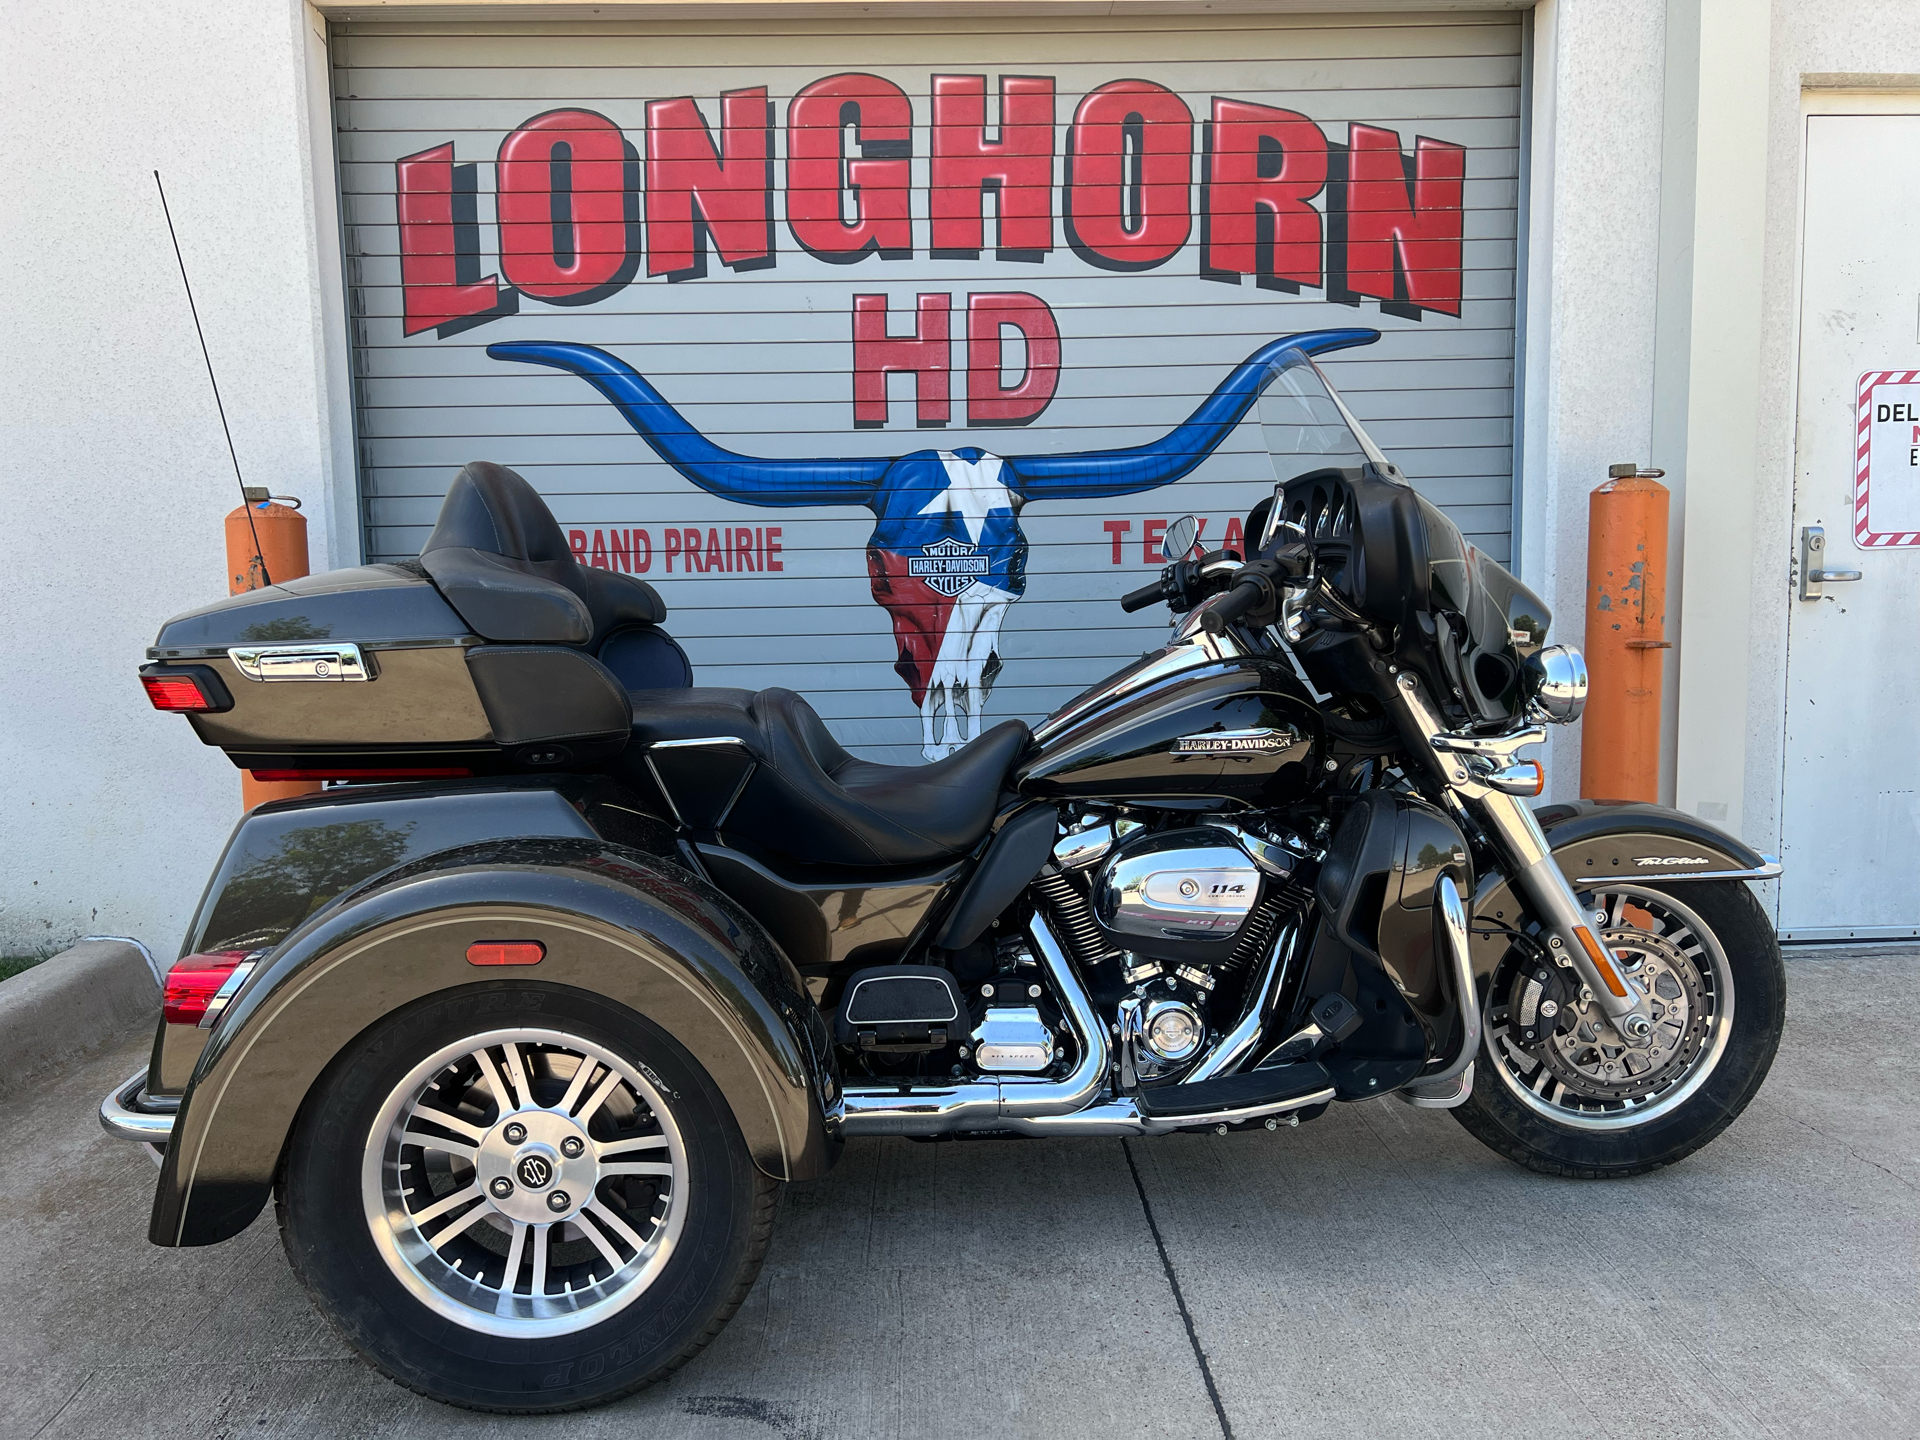 2020 Harley-Davidson Tri Glide® Ultra in Grand Prairie, Texas - Photo 1